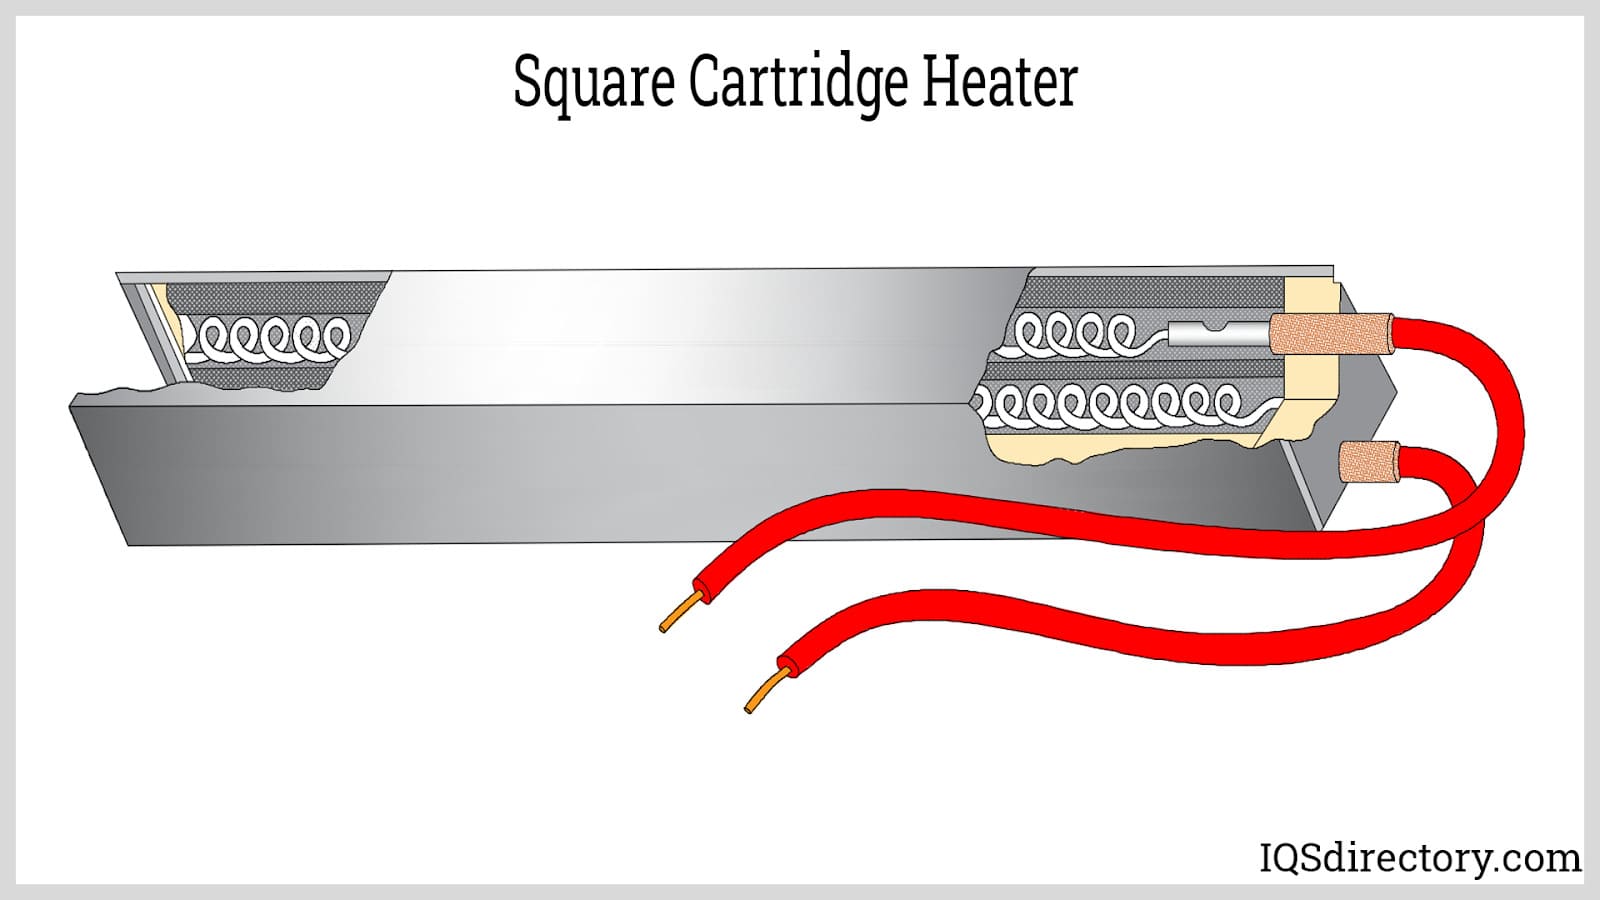 Square Cartridge Heater